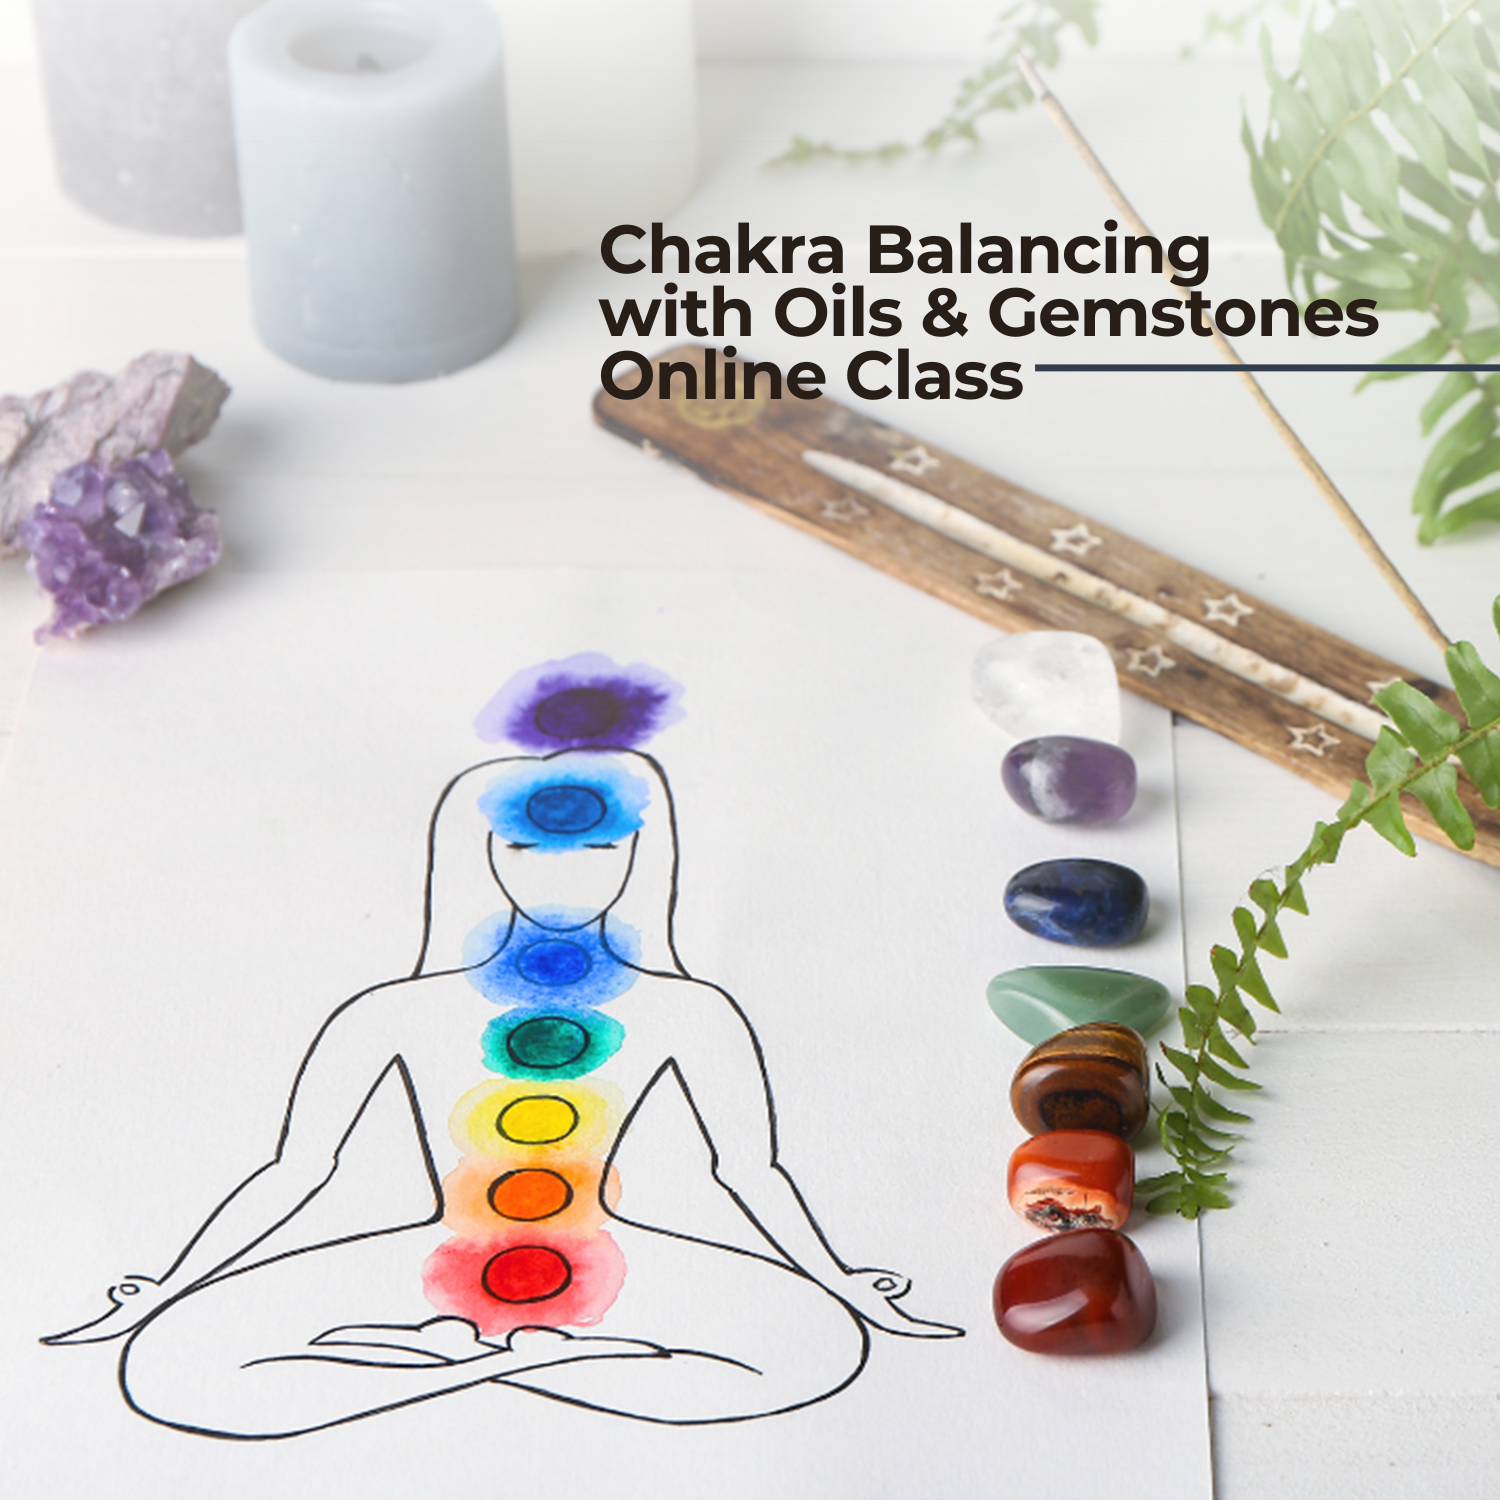 Chakra Balancing with Oils & Gemstones Online Class